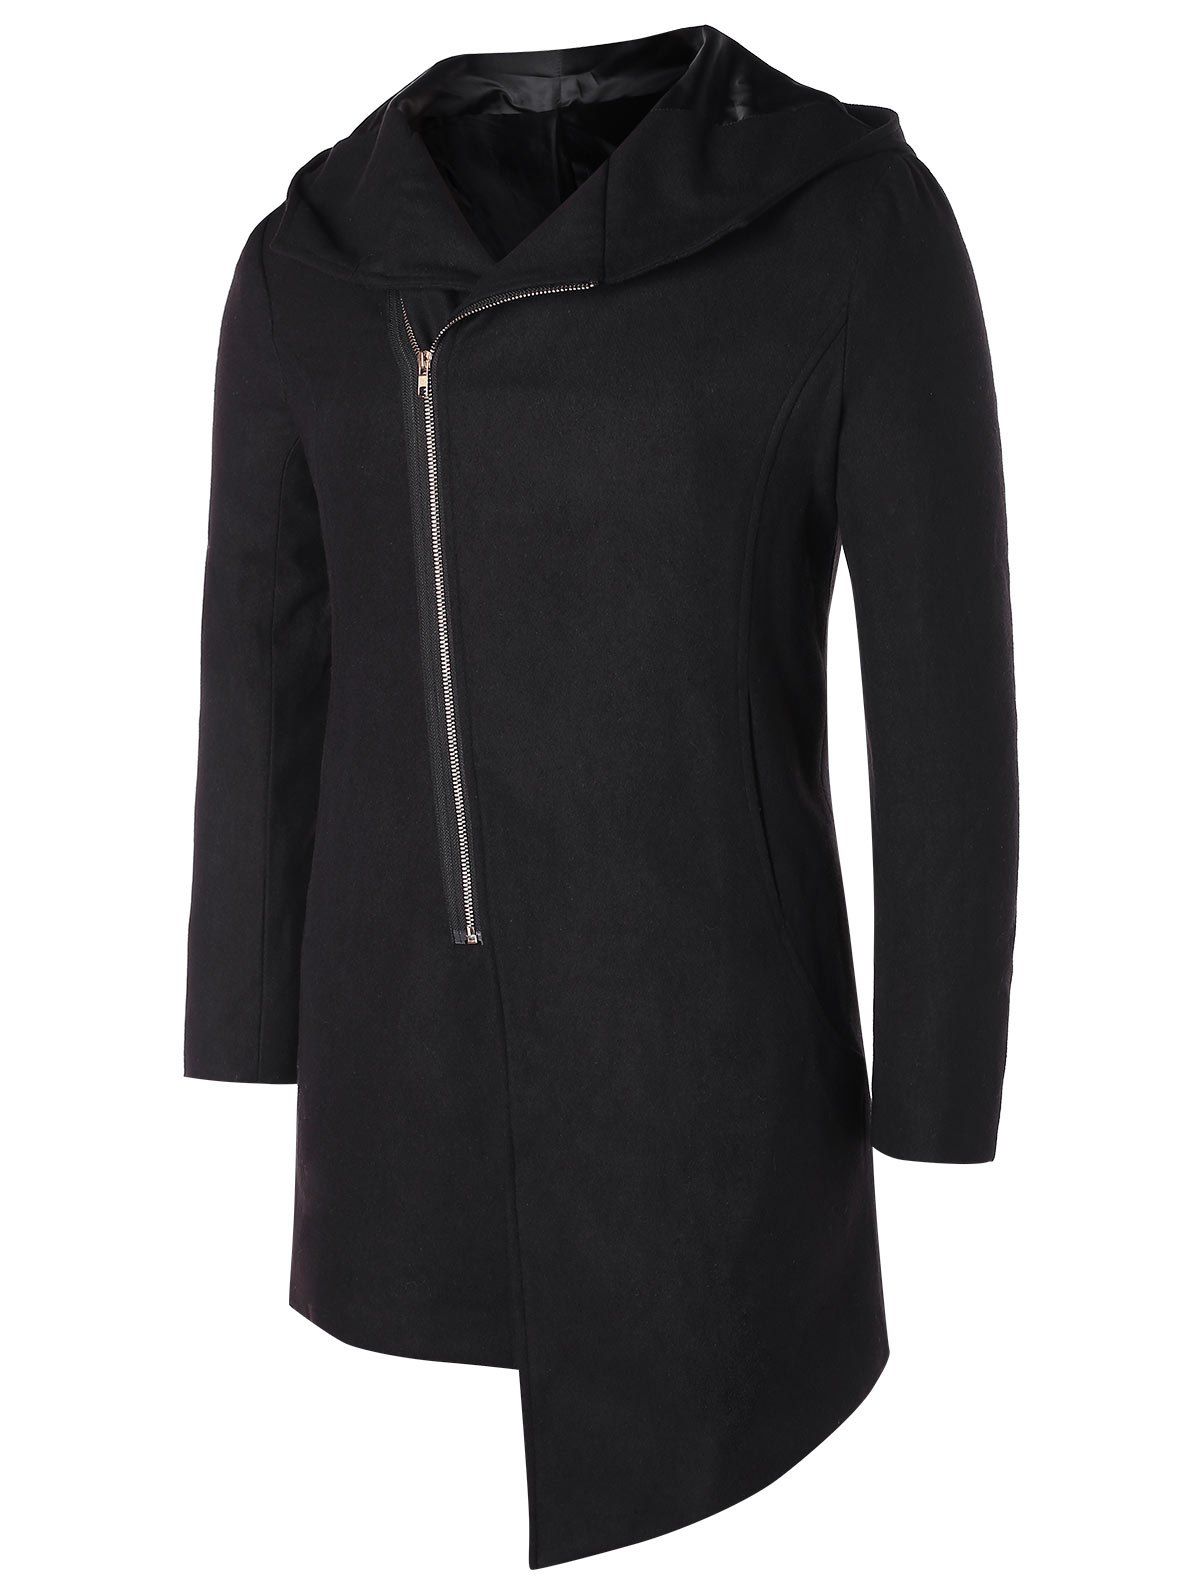 Asymmetric Zip Up Hooded Longline Coat - BLACK 2XL